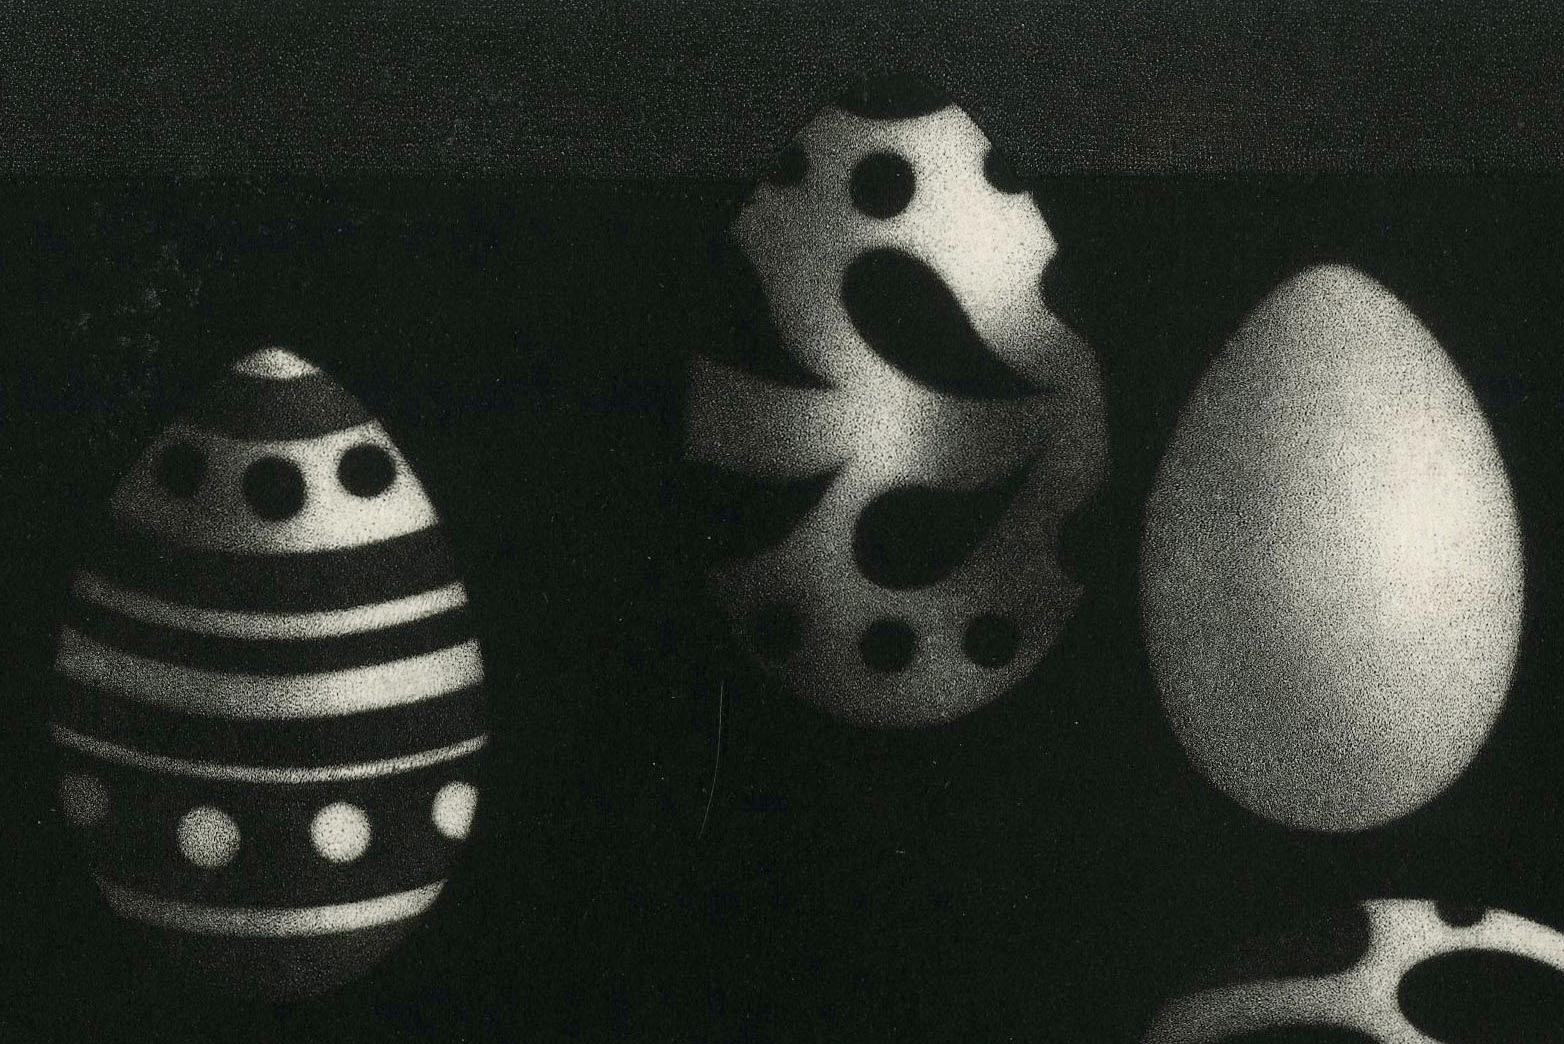 Des Oeufs Pout Ta Fette (Holiday Eggs) - Print by Mario Avati